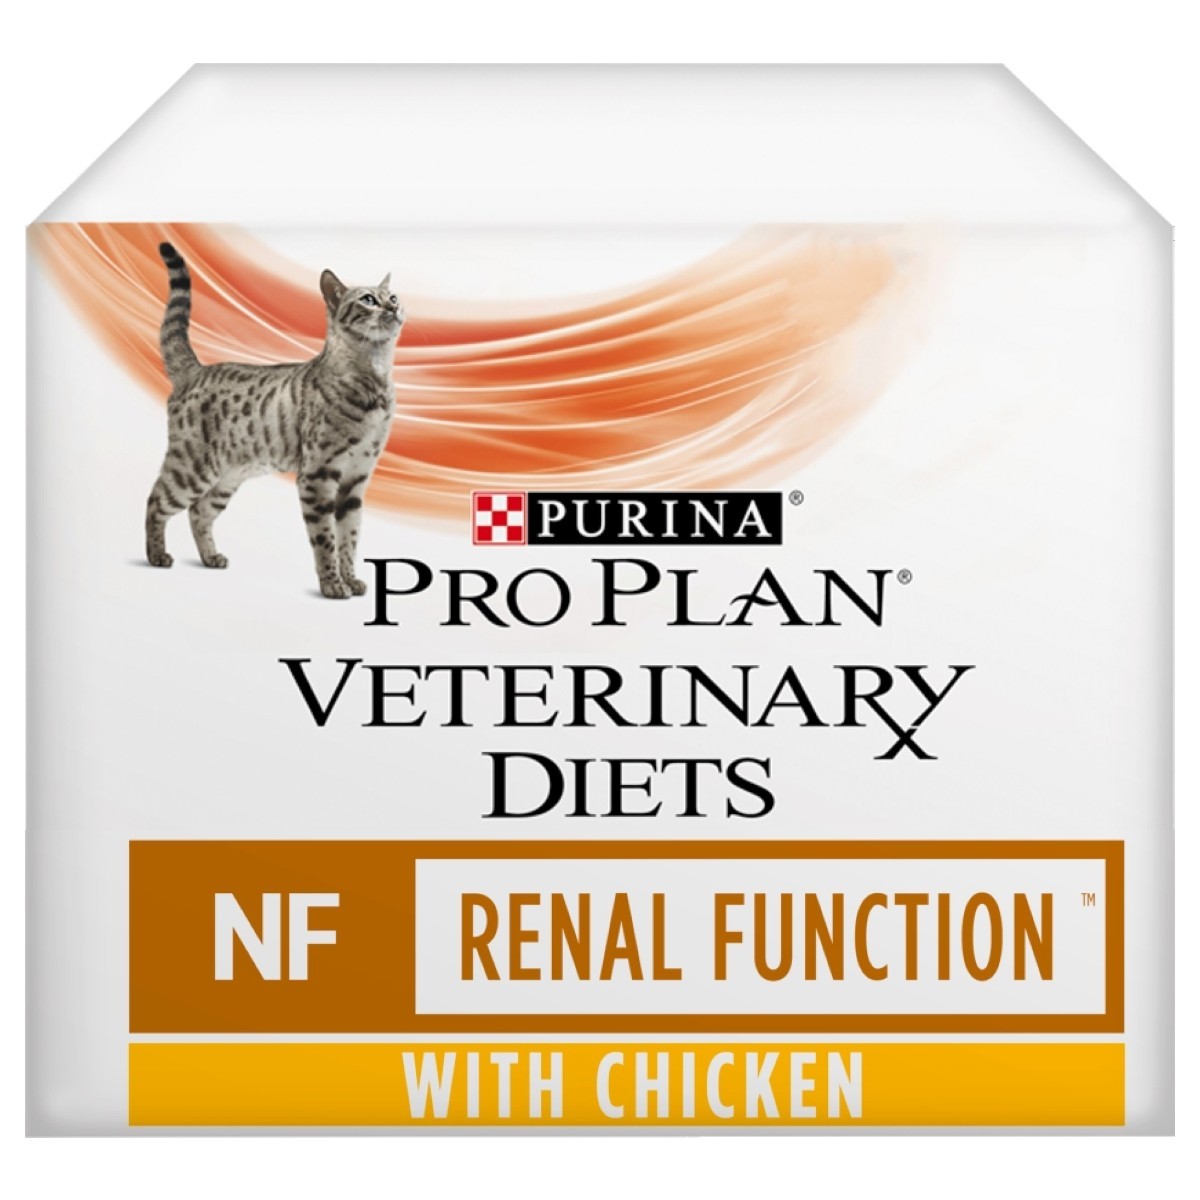 purina diet cat food